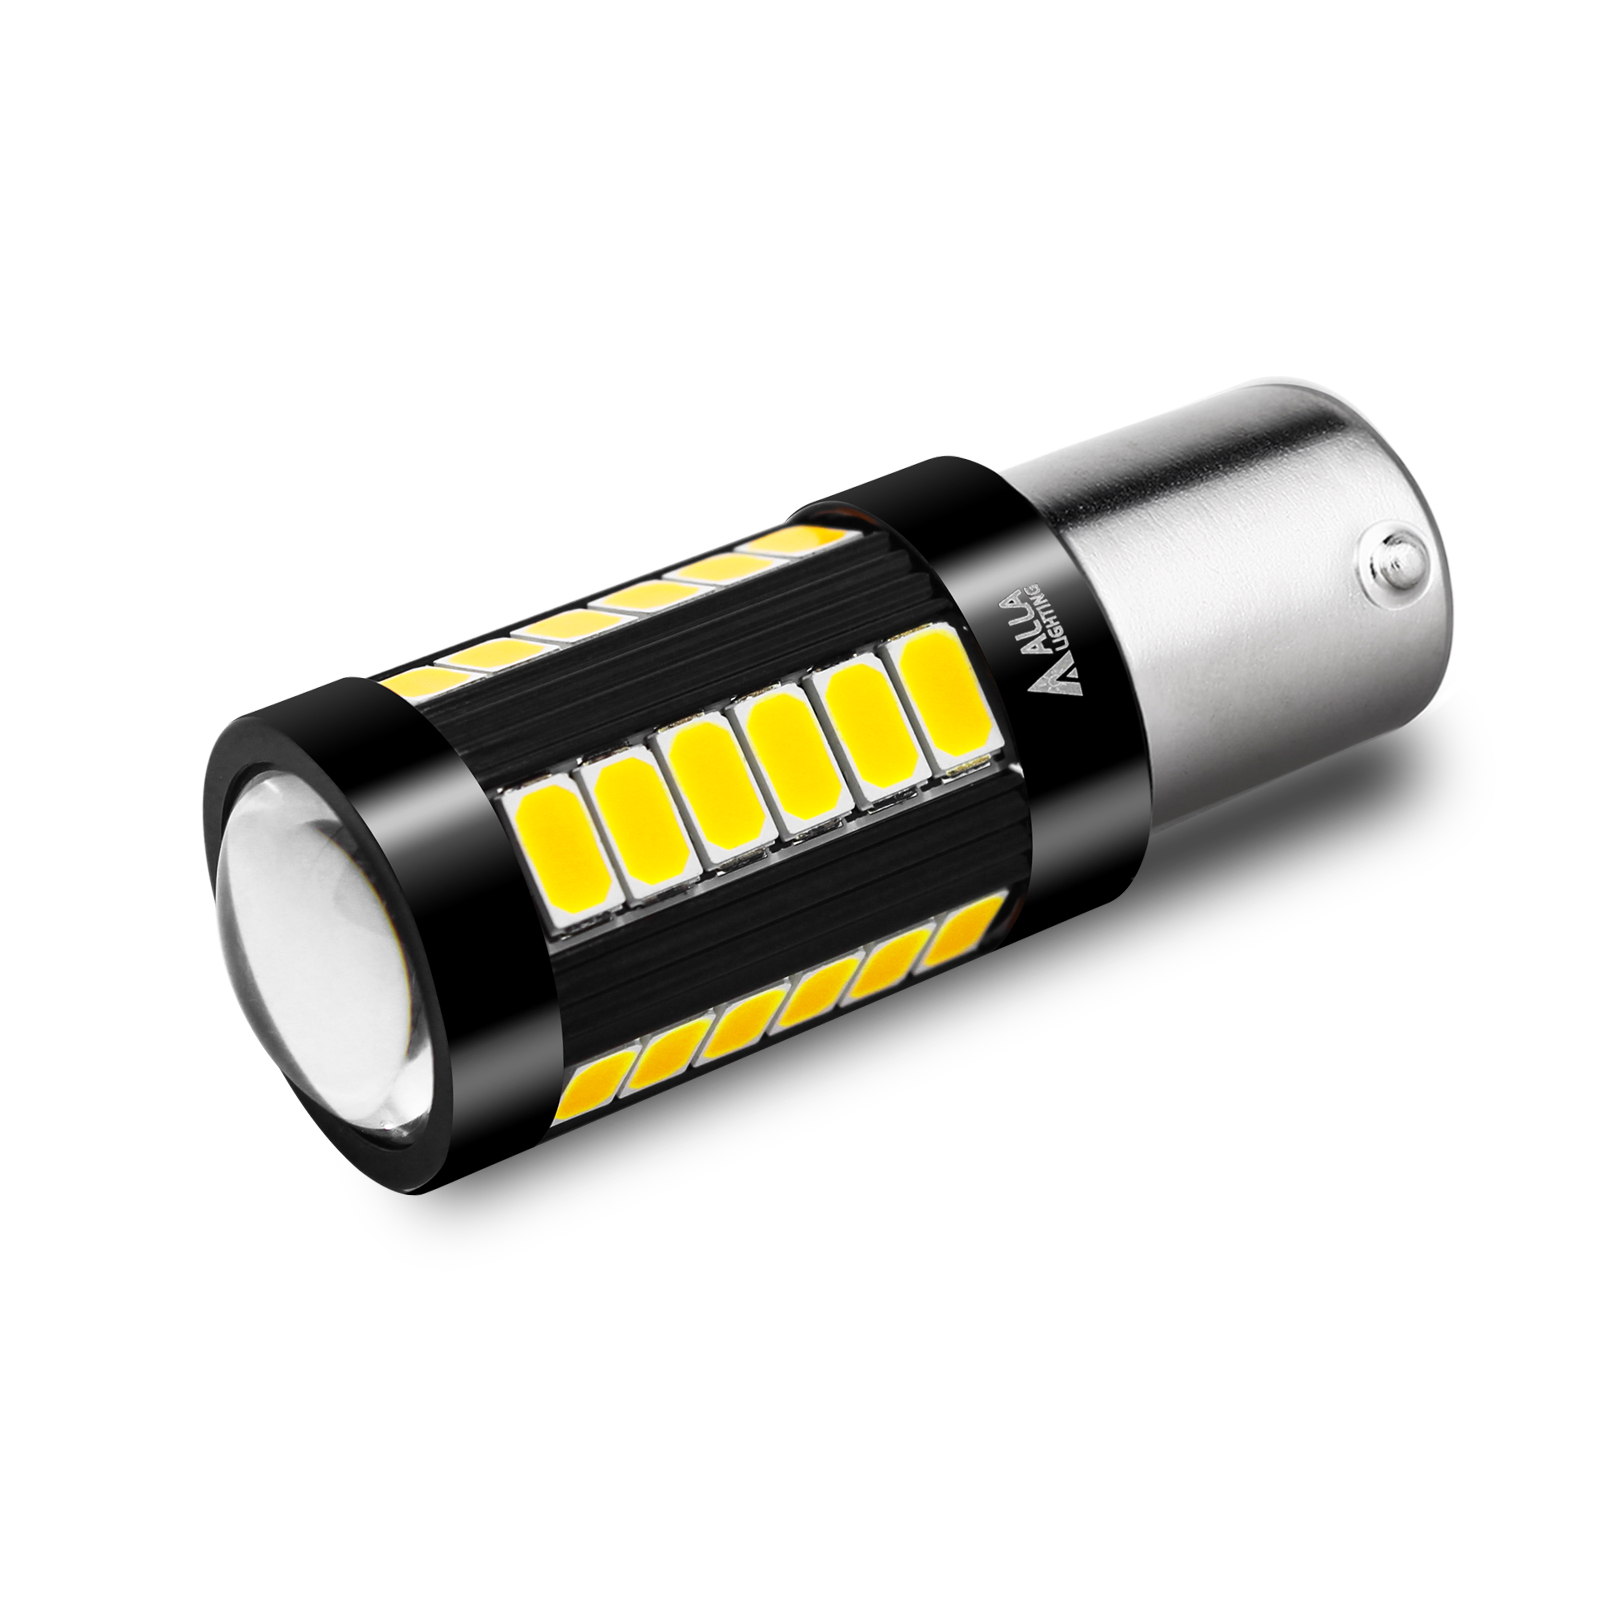 2020 Ram ProMaster City Brake Lights Bulb 7506 P21W LED Stop Lamps